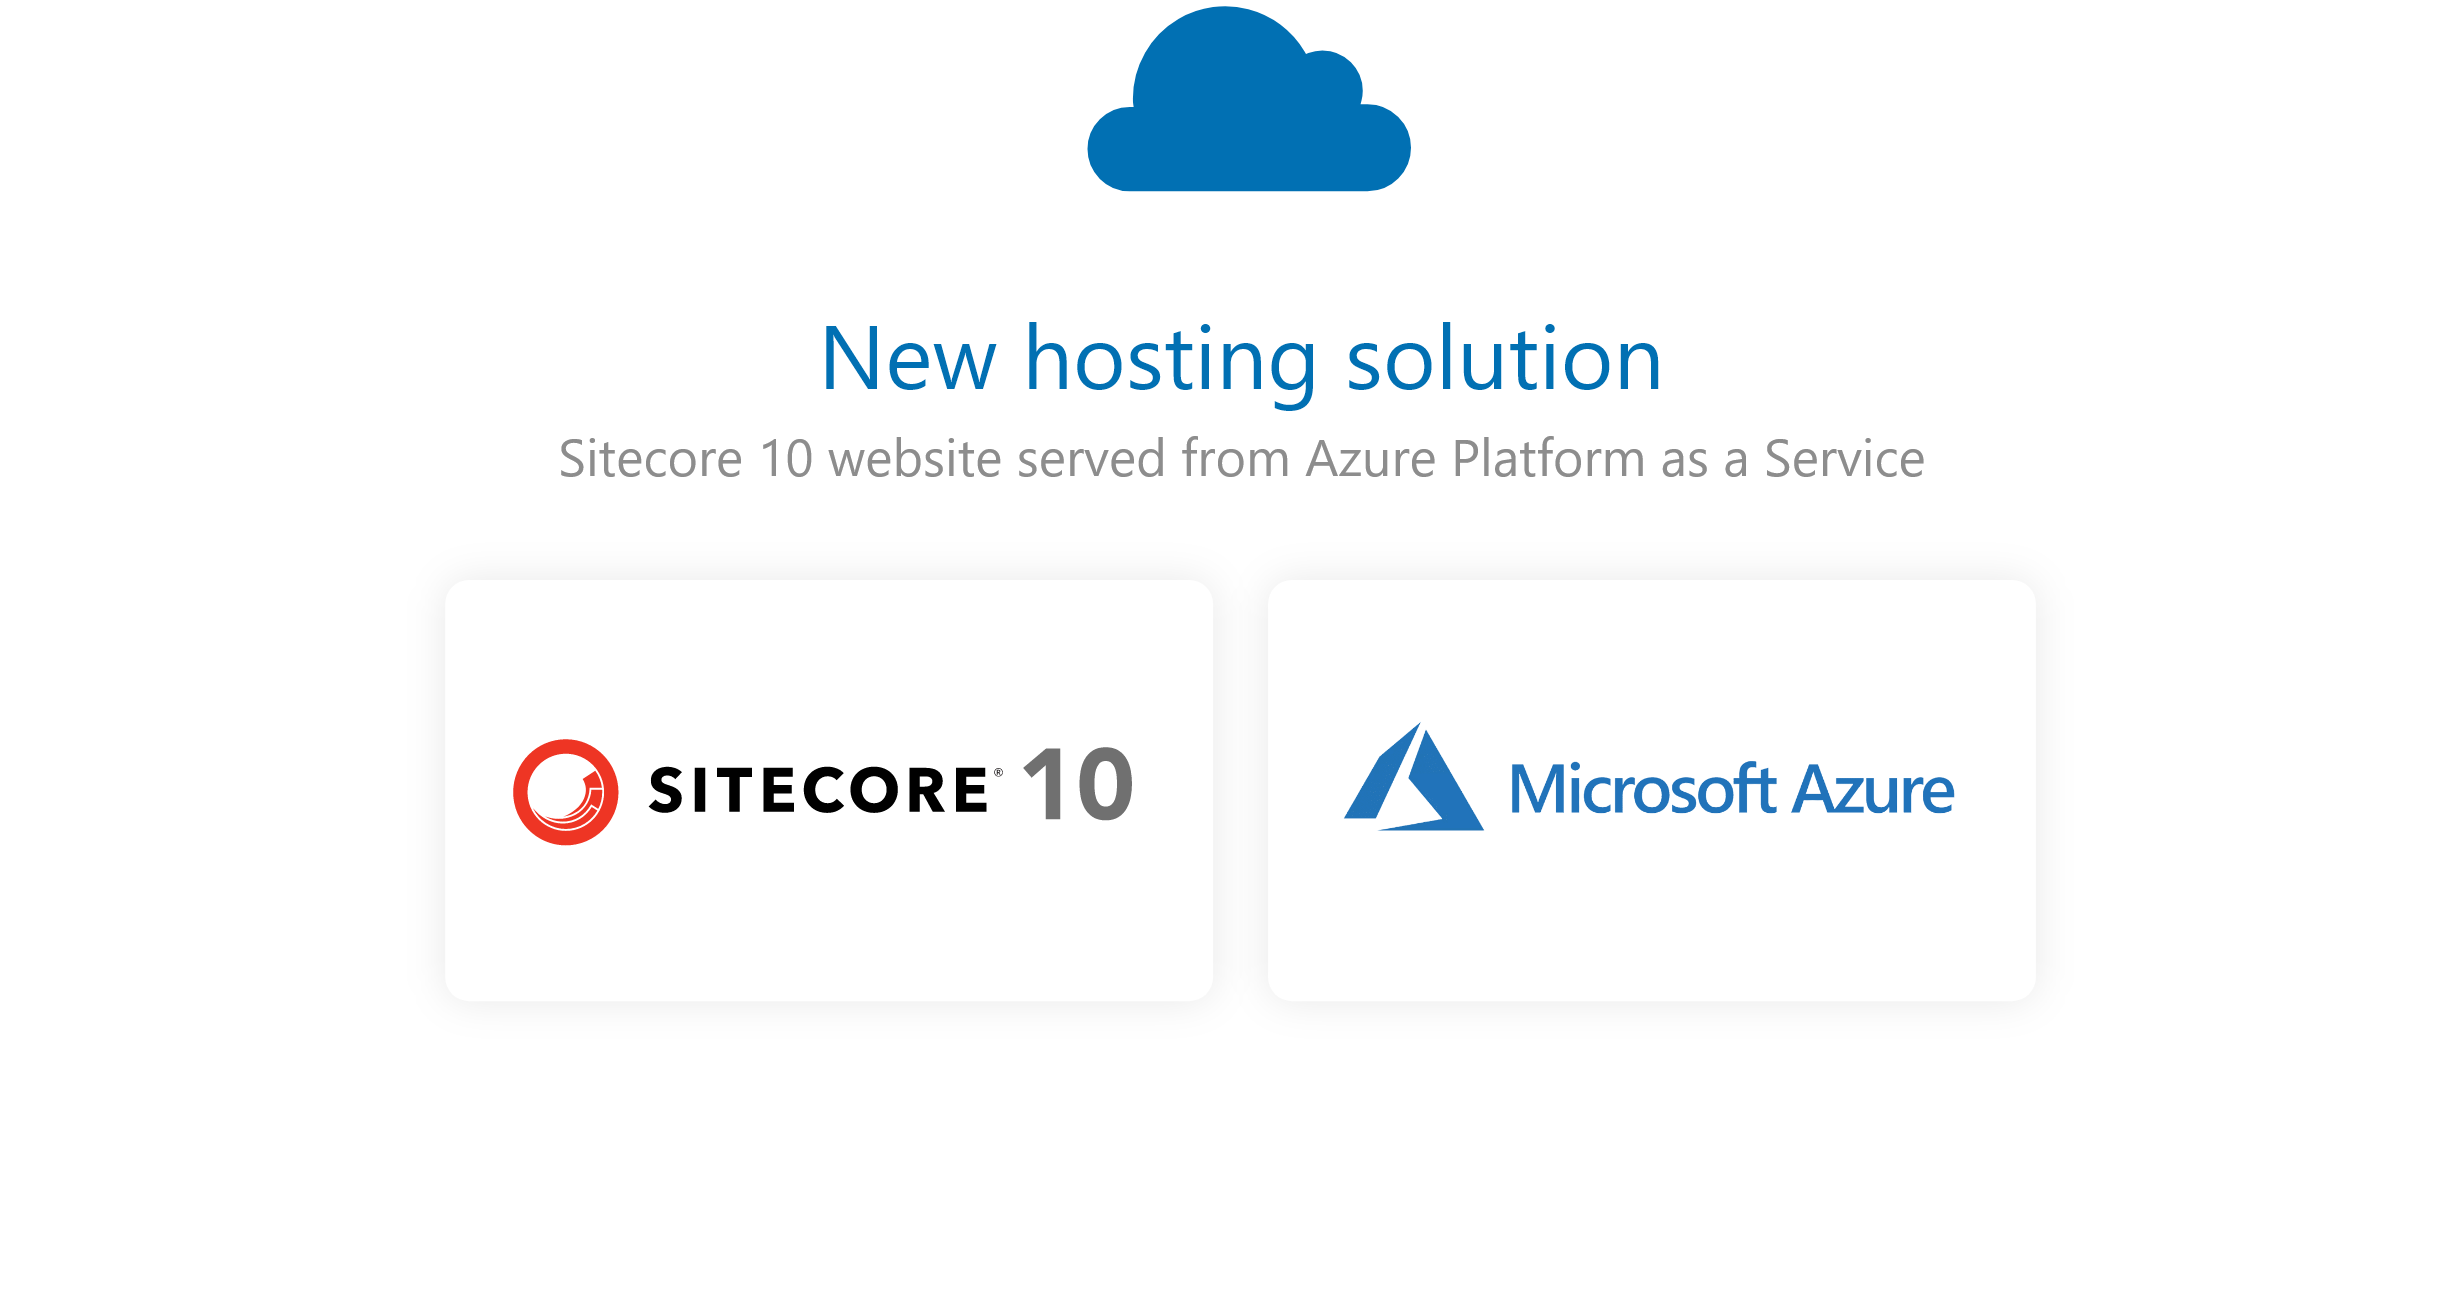 New hosting solution. Sitecore 10. Microsfot Azure.